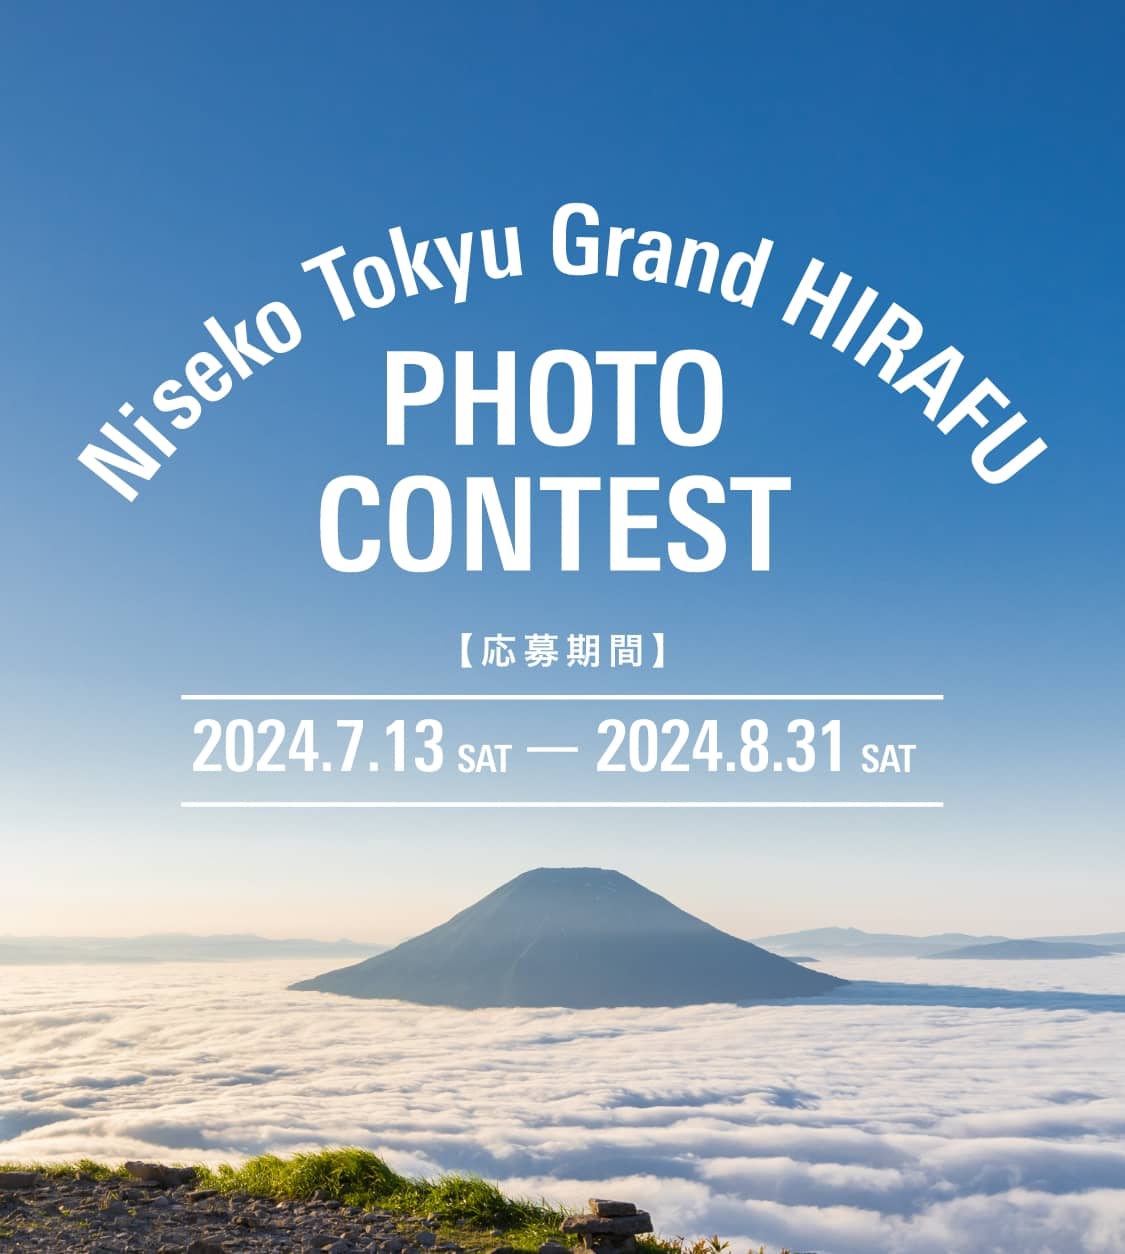 Niseko Tokyu Grand HIRAFU PHOTO CONTEST